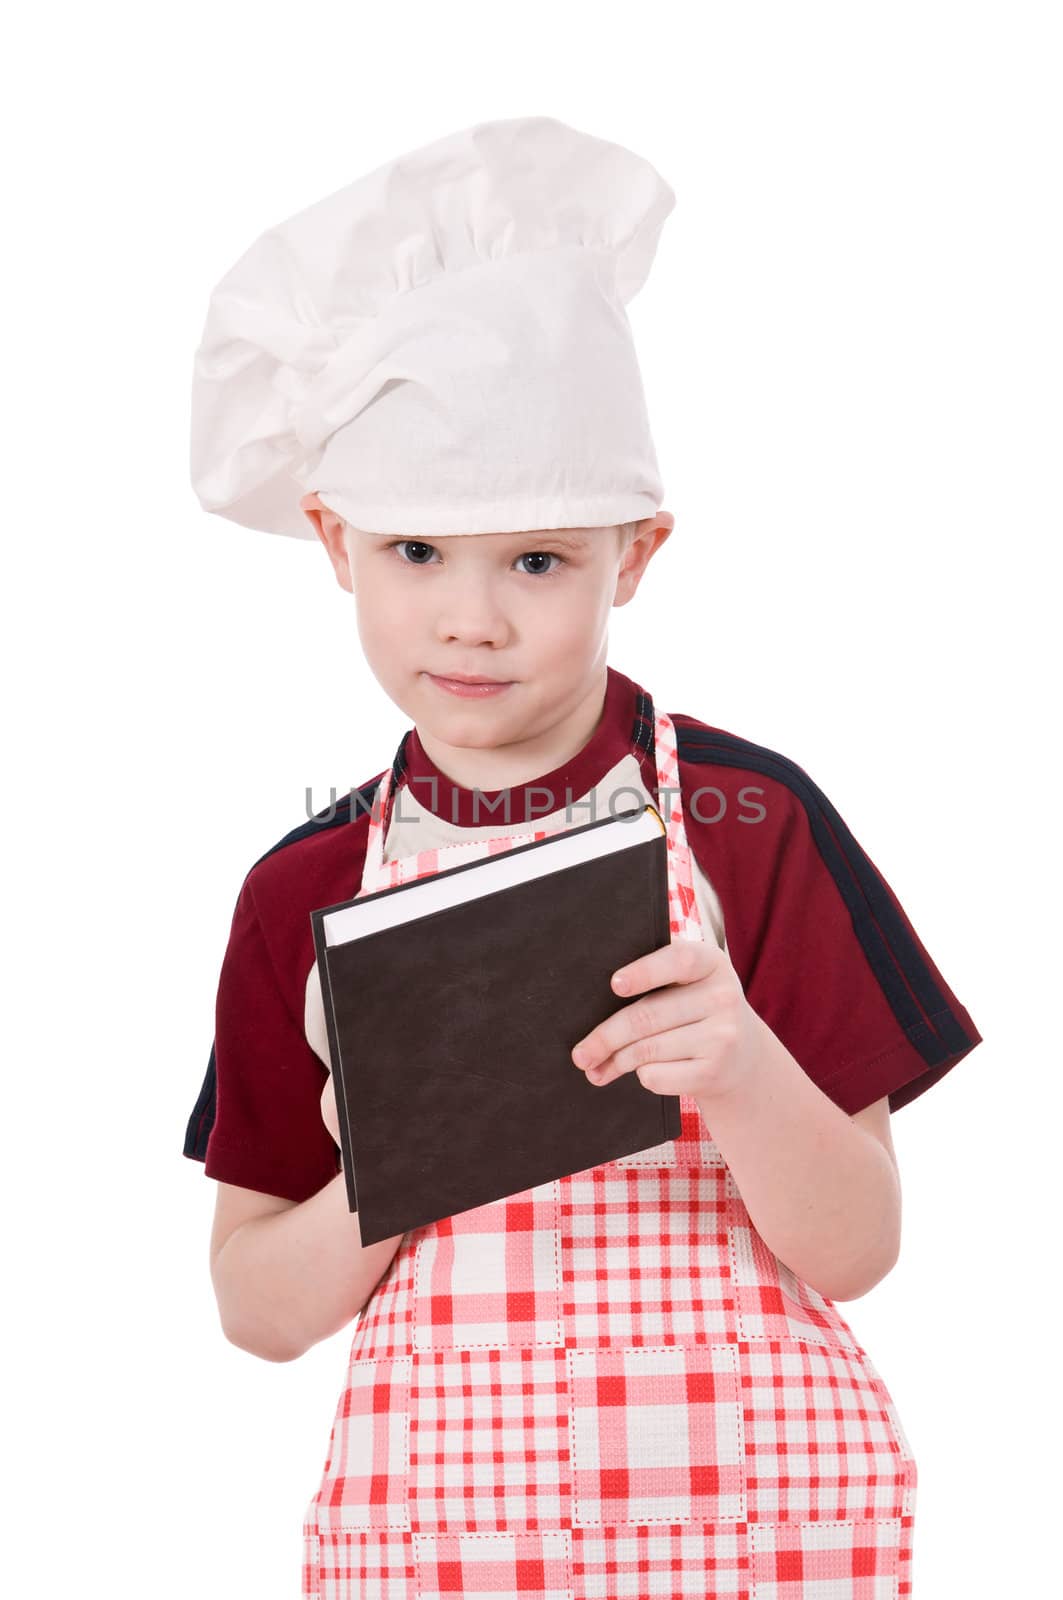 child chef by uriy2007